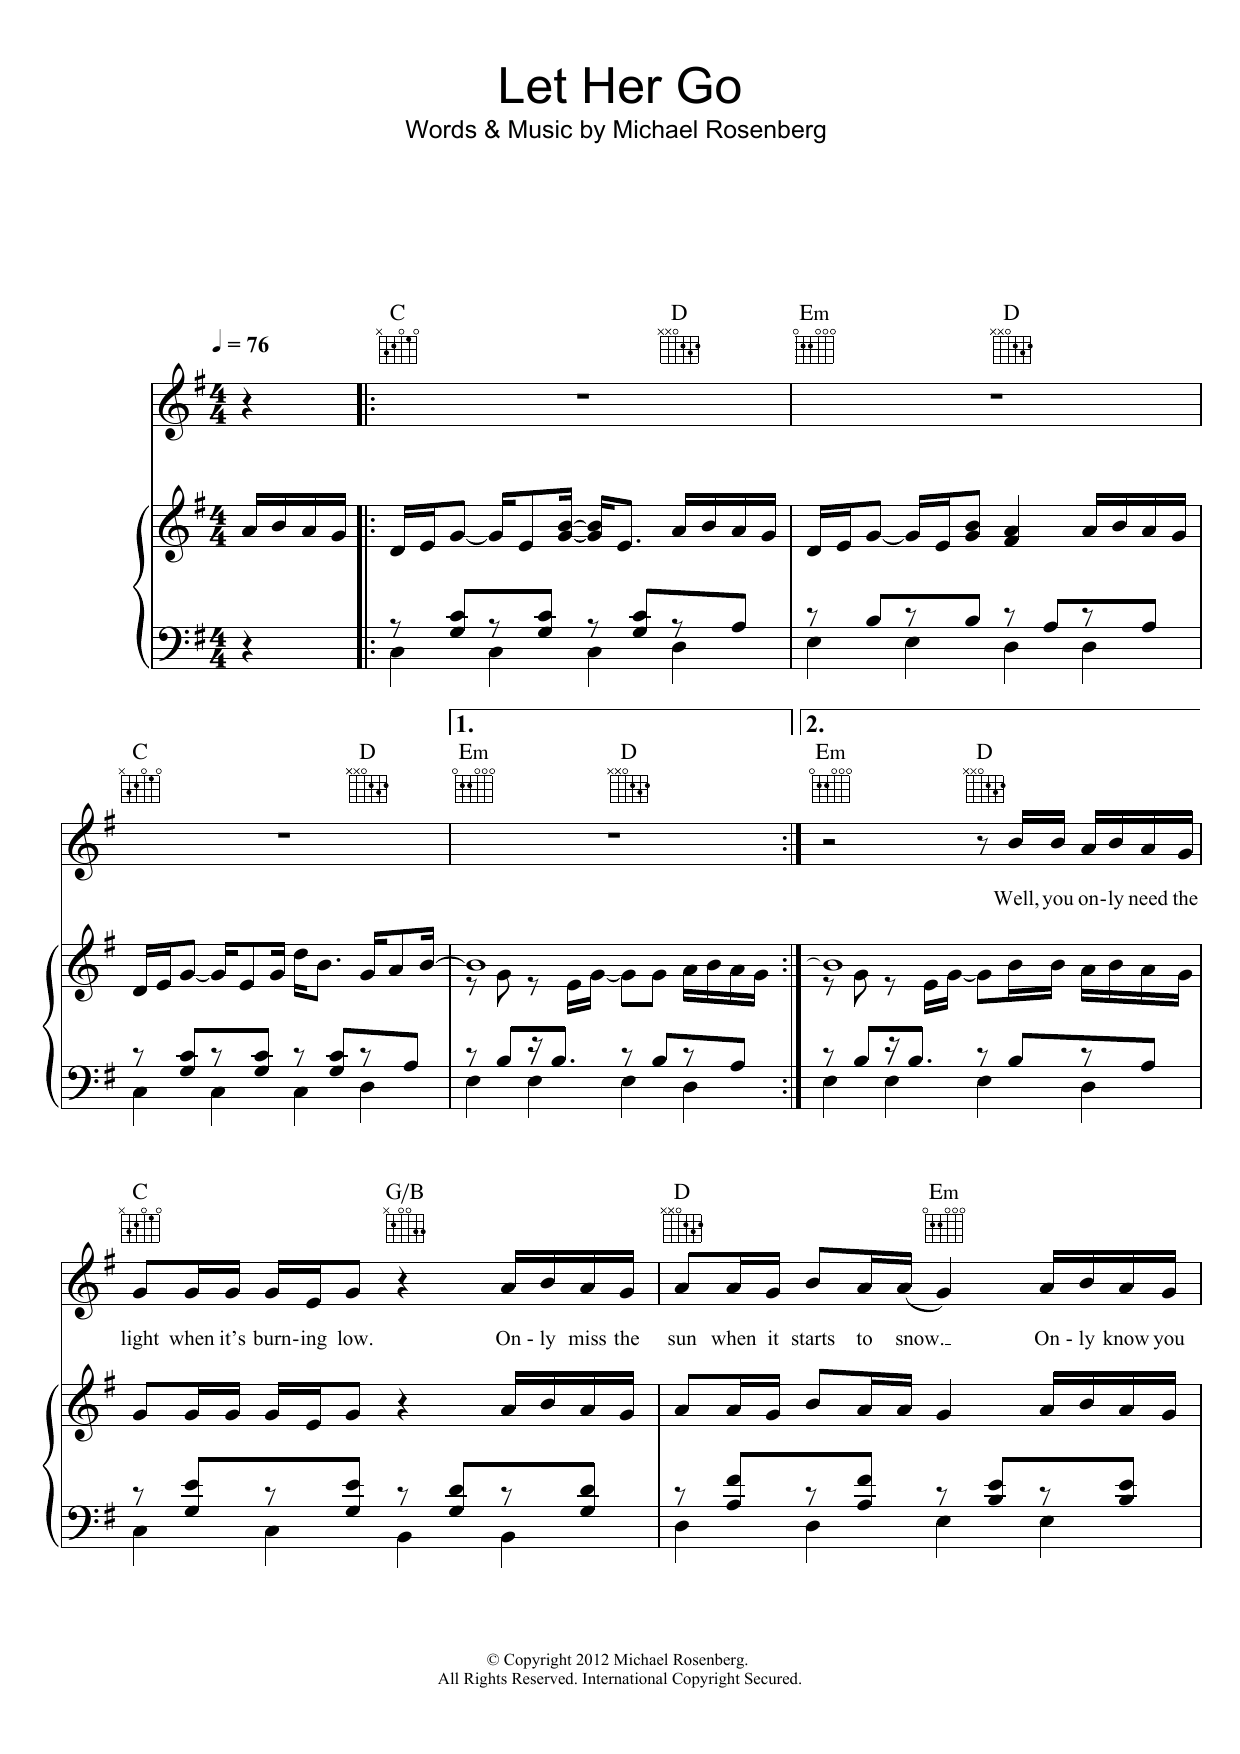 Passenger Let Her Go Sheet Music Notes & Chords for Alto Saxophone Duet - Download or Print PDF